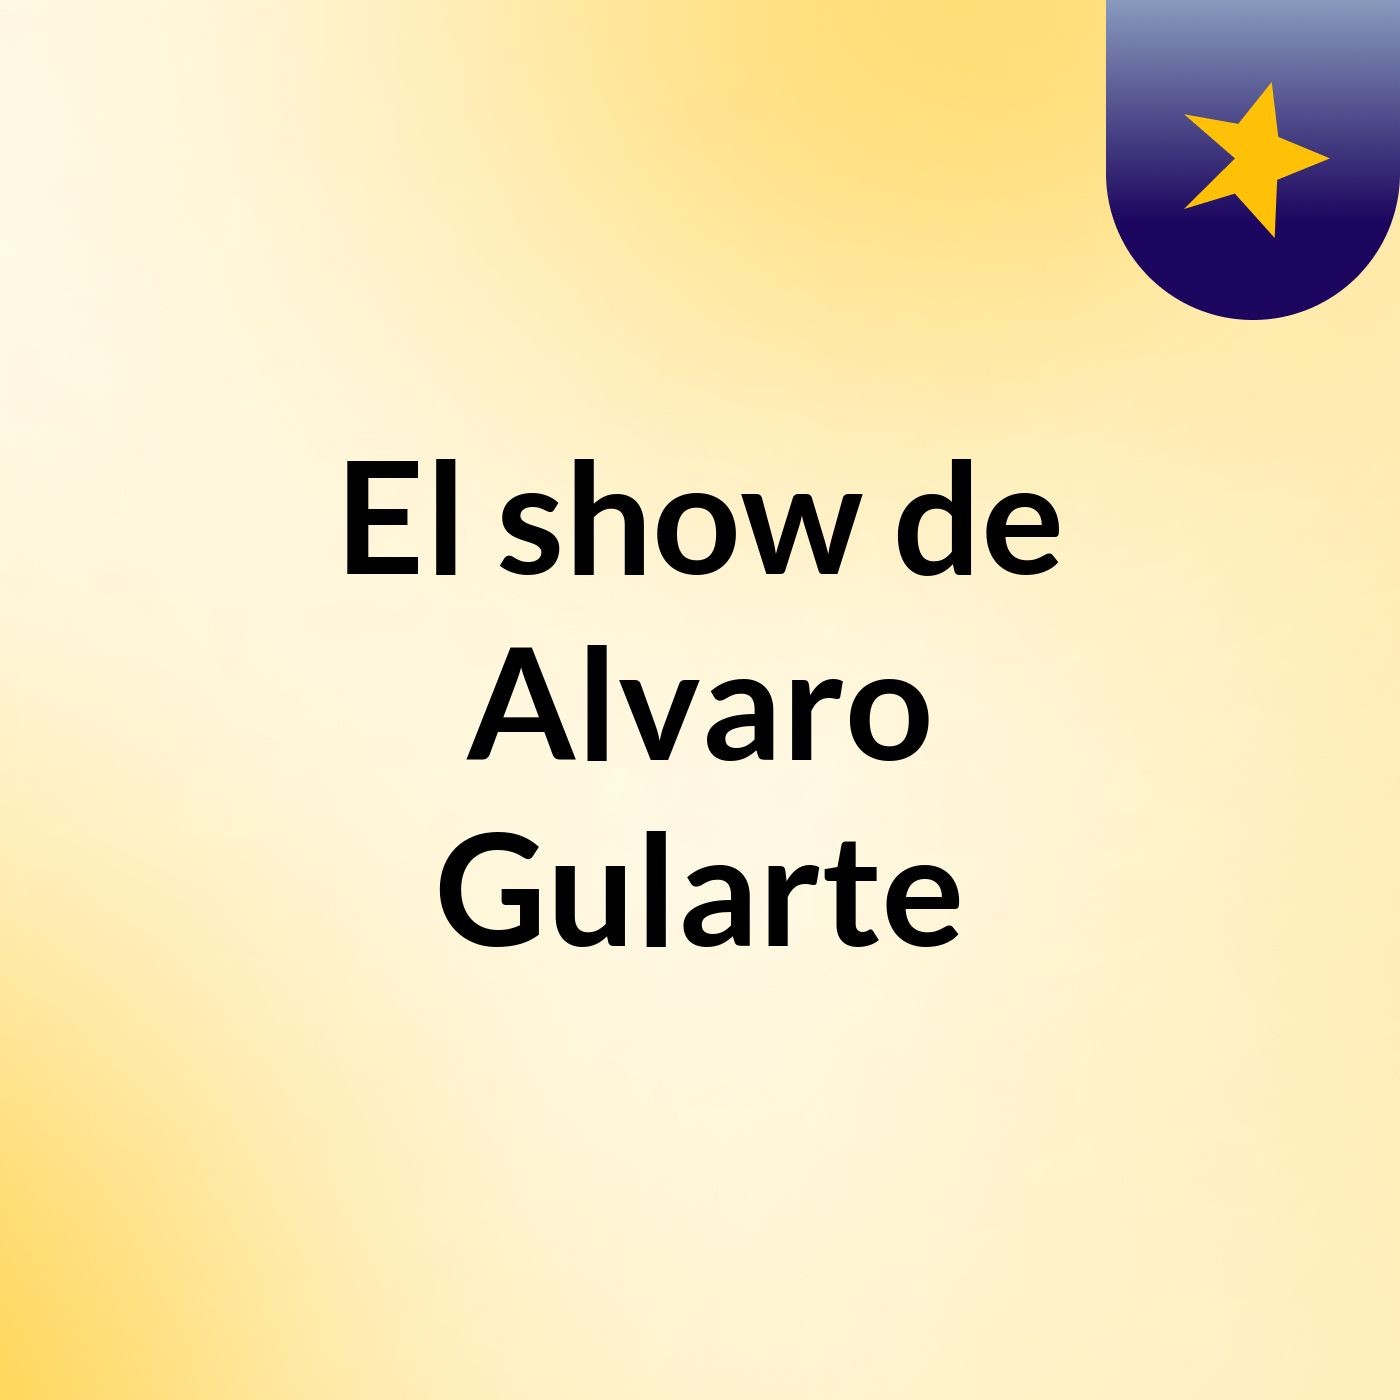 El show de Alvaro Gularte